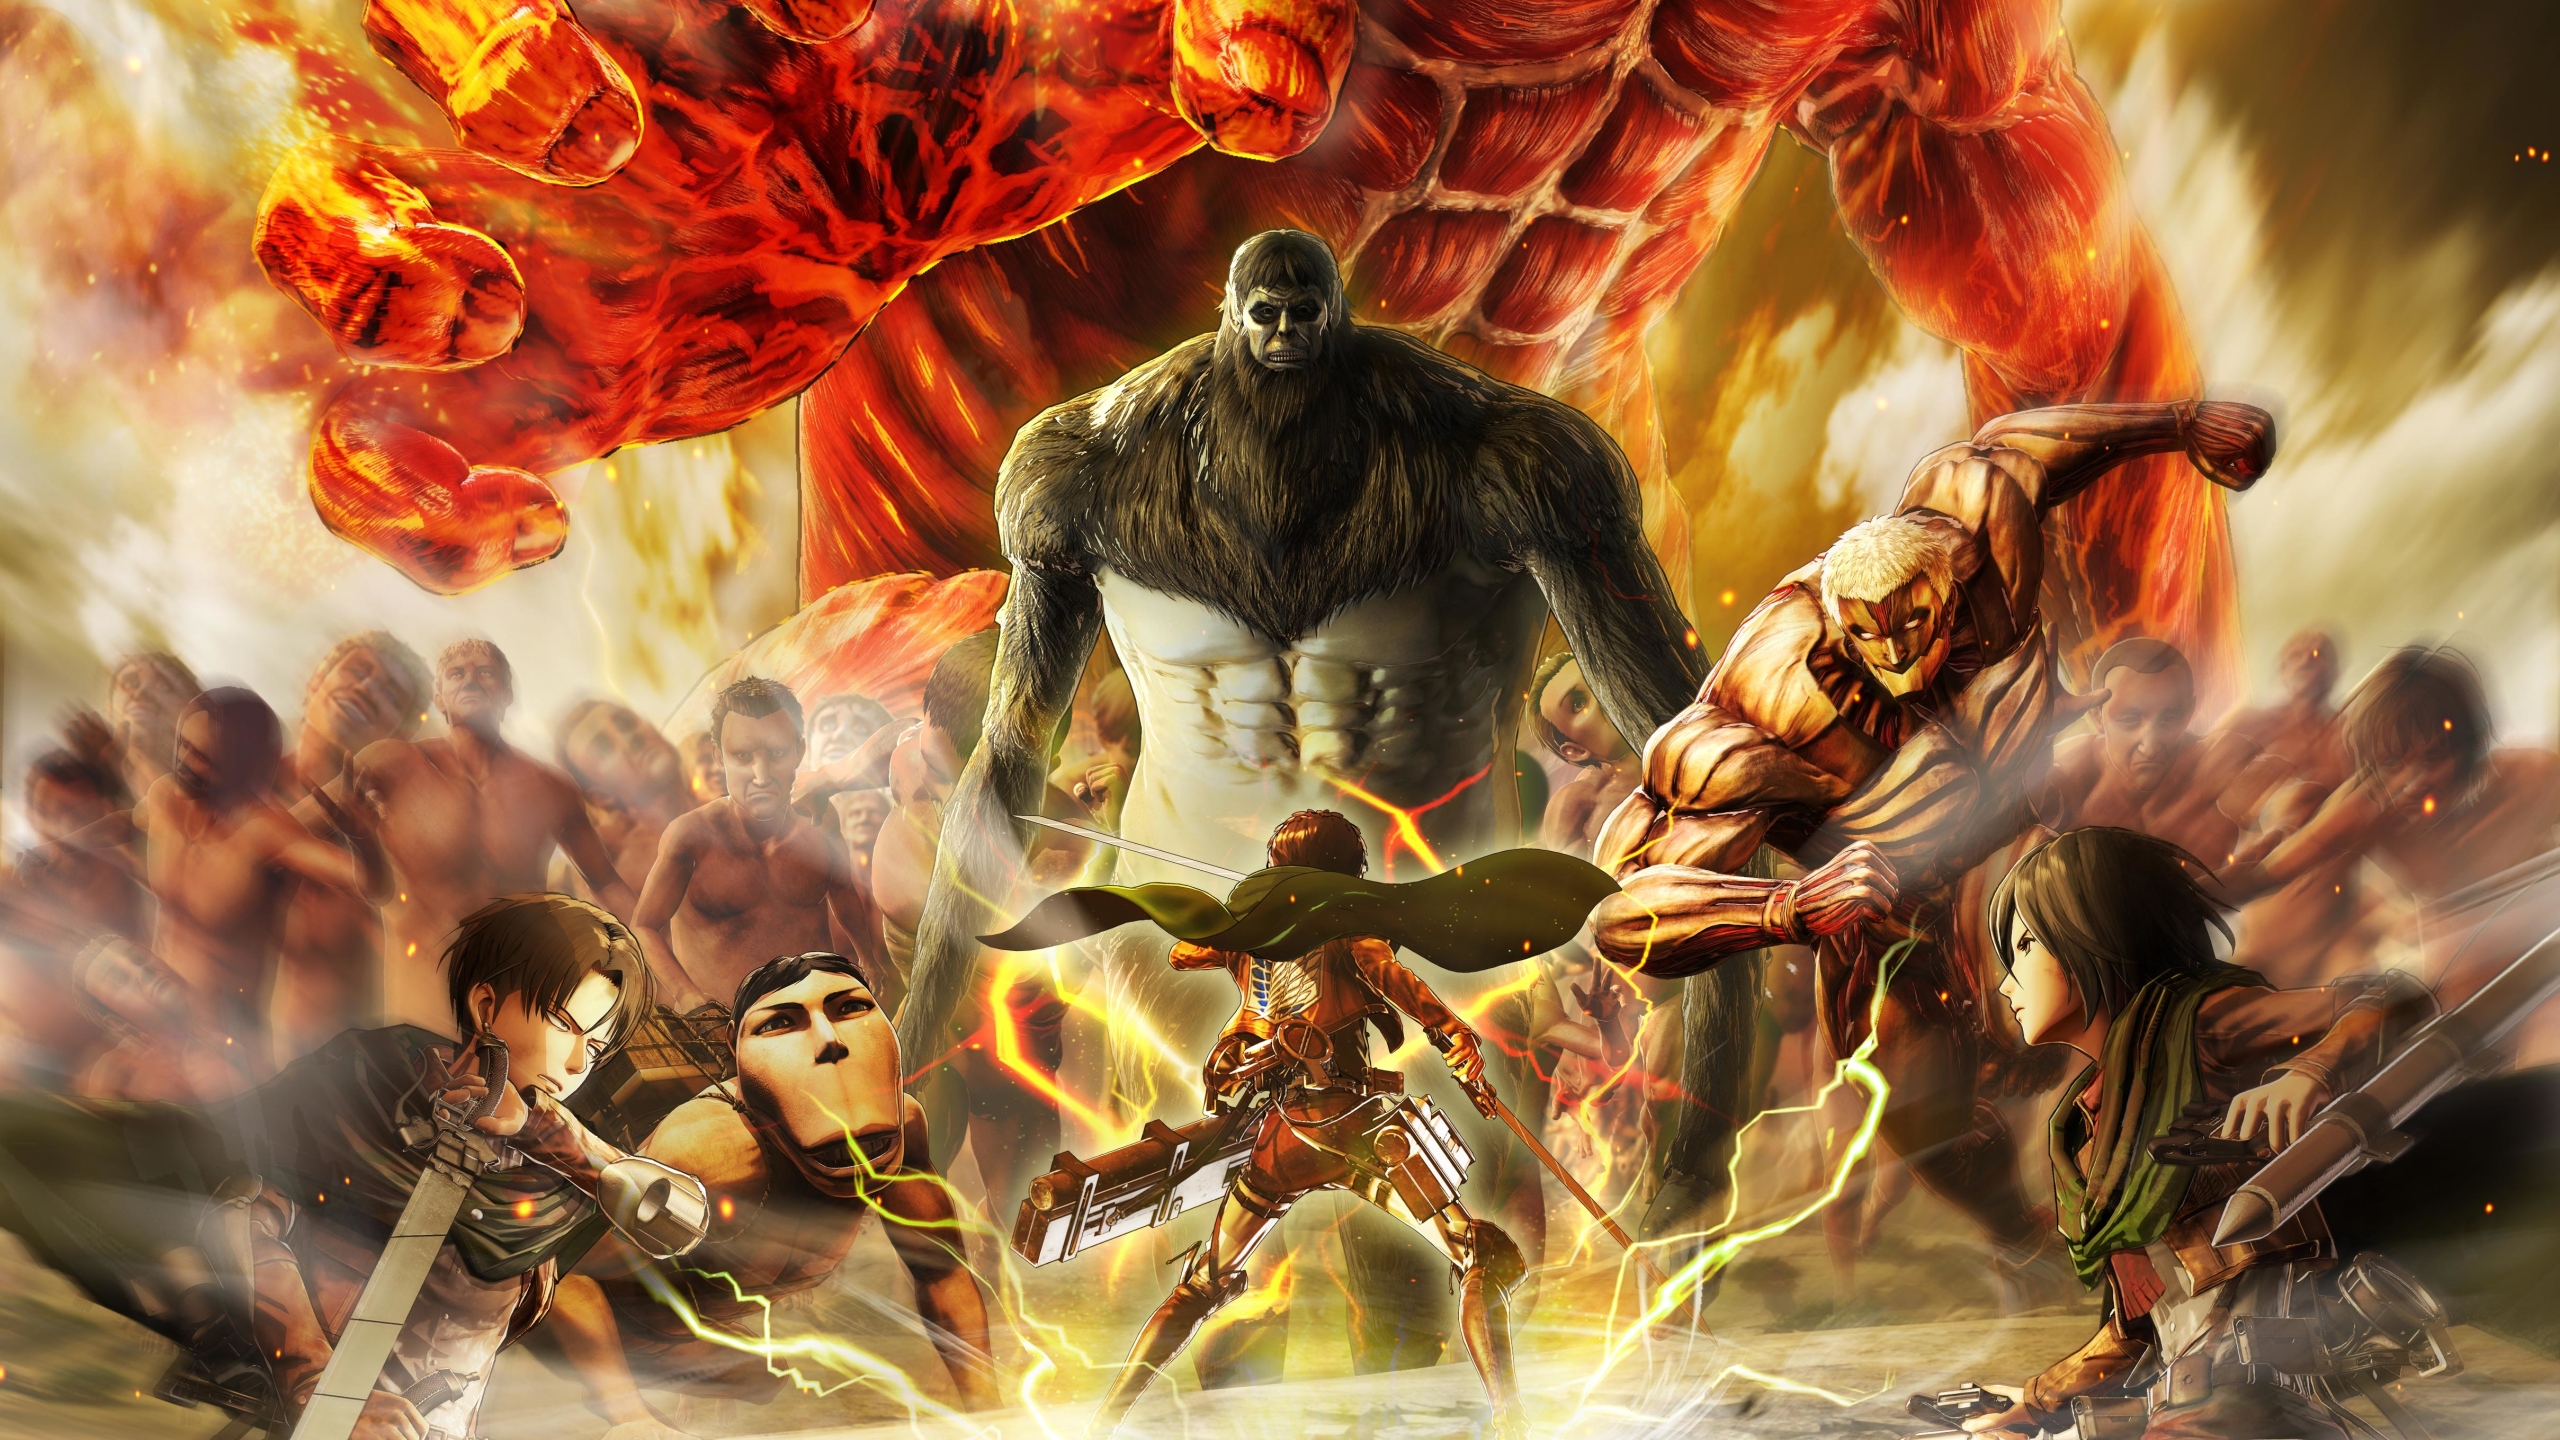 attack on titan game pc download free